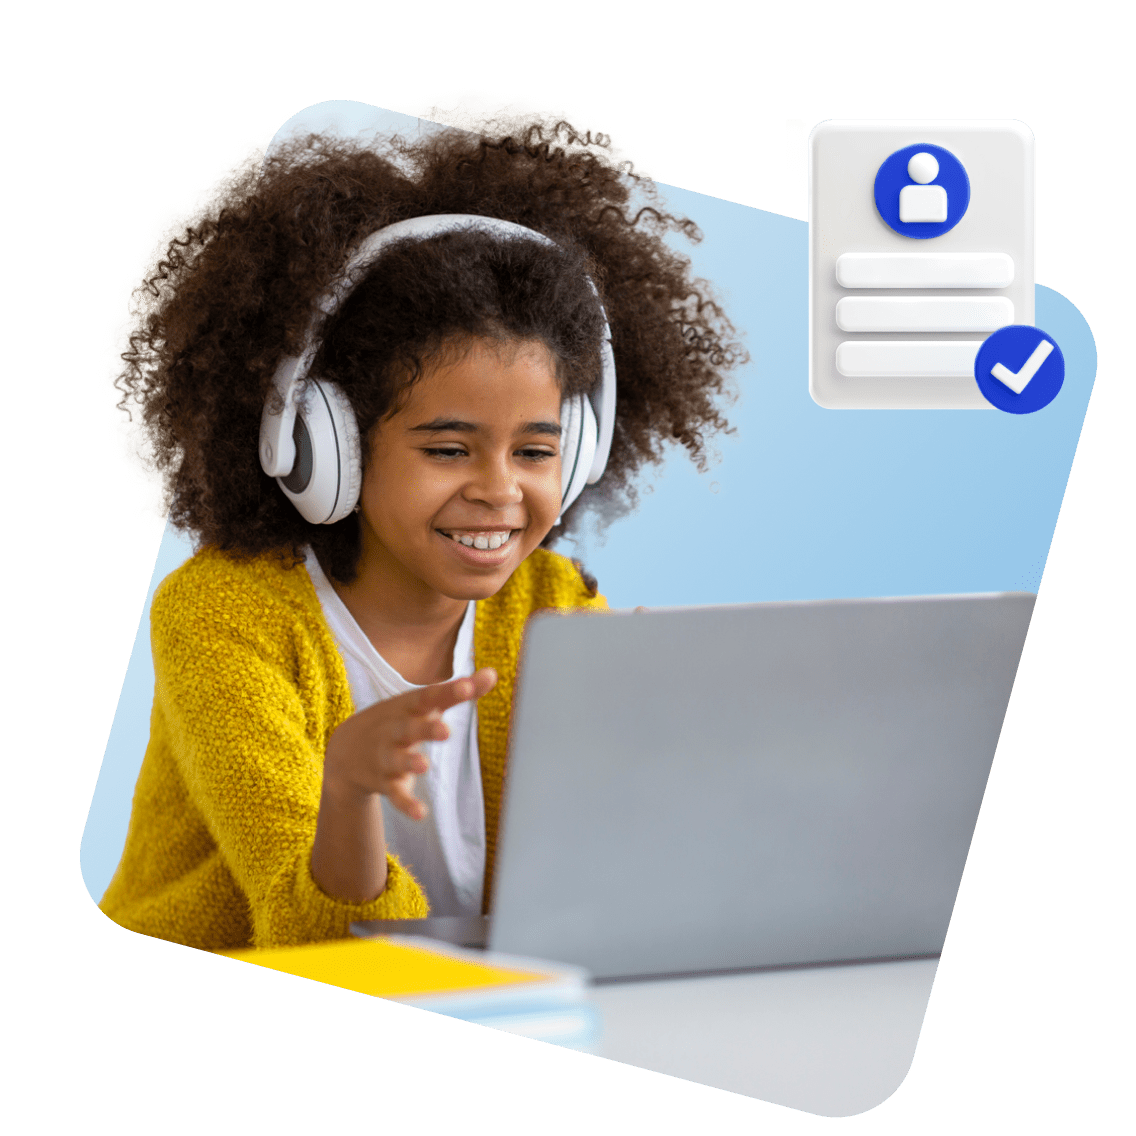 North Carolina Online Schools image 1 (name 3 Young Girl Laptop Headphones Certificate 1 1)